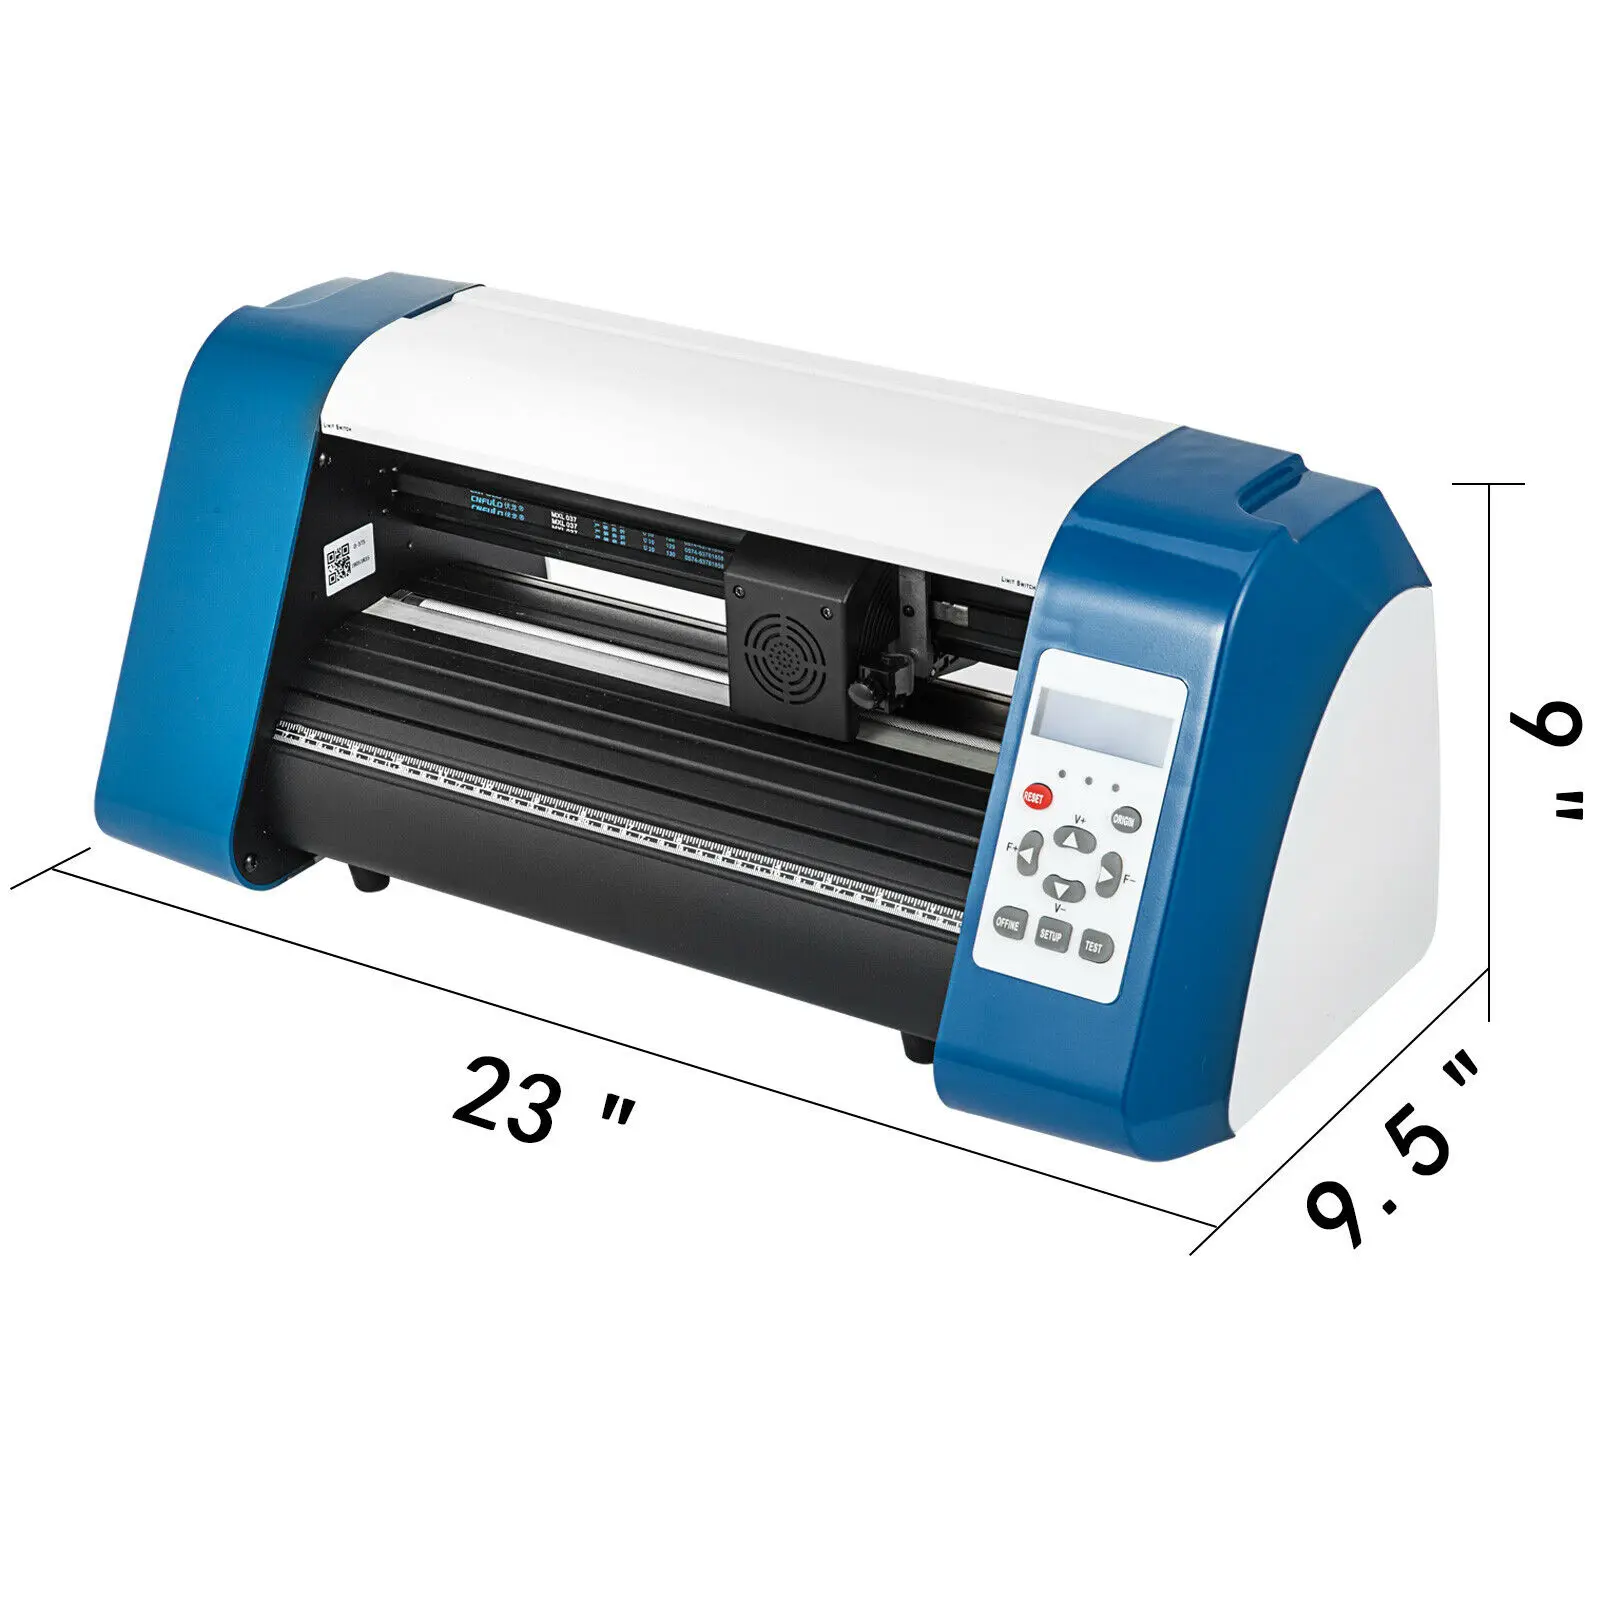 Cricut Printer - Do Cricut Machines Print?